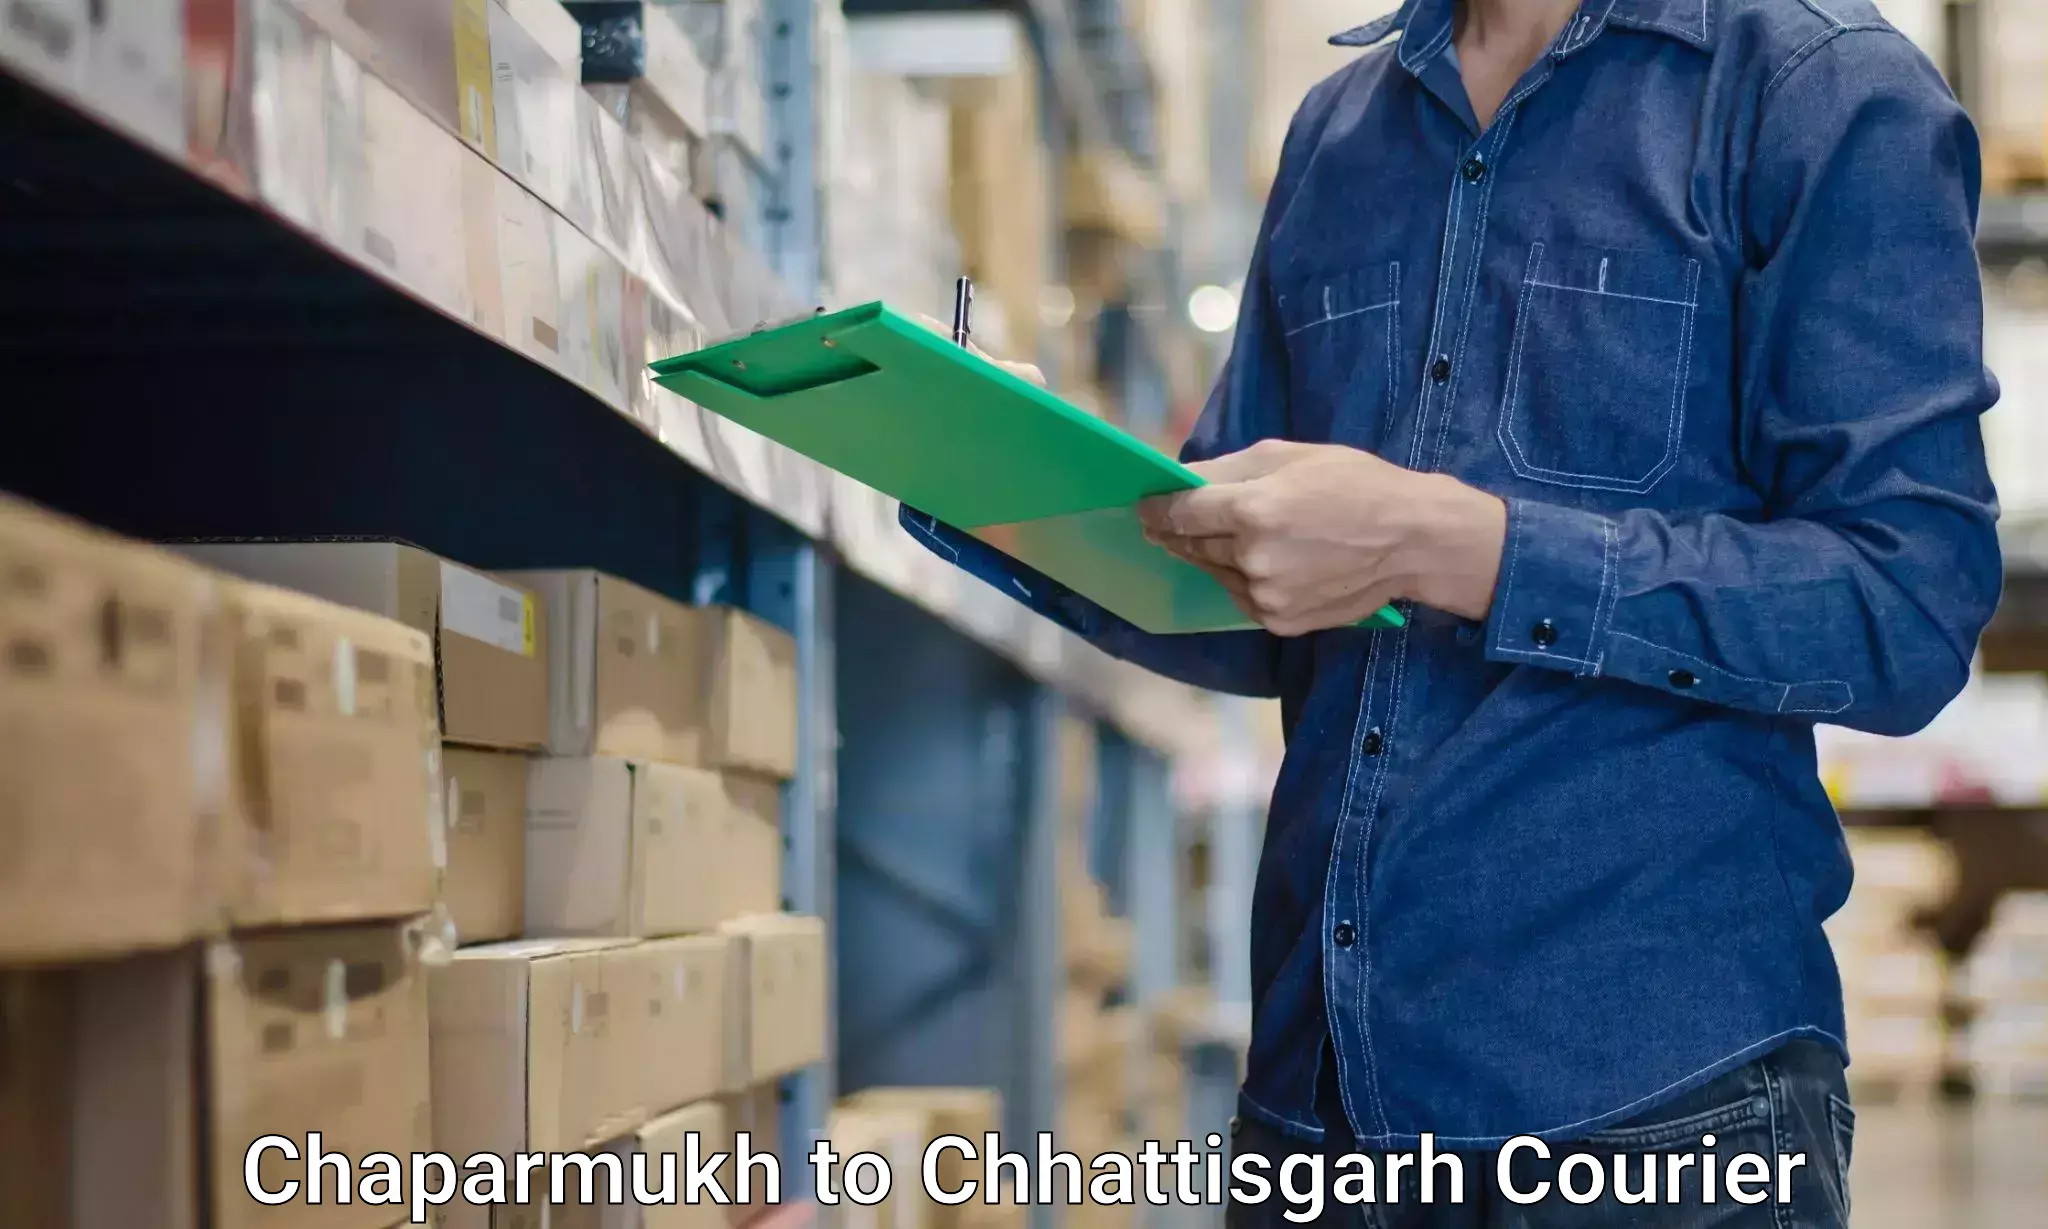 Professional moving company Chaparmukh to Bastar